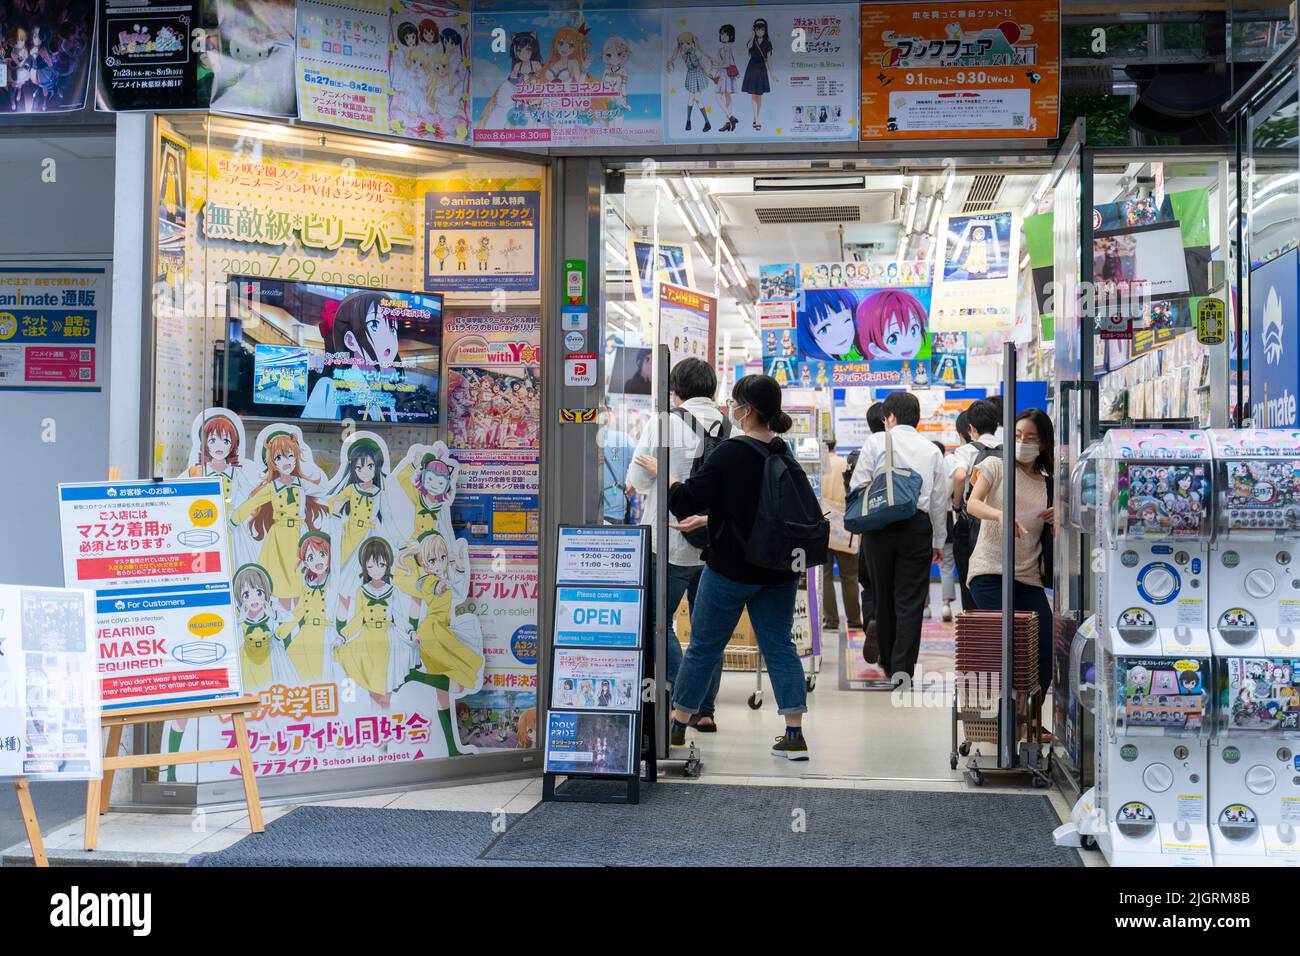 Akihabara, Japan- July 30, 2020: People enter an anime merchandise store in Akihabara. Stock Photo